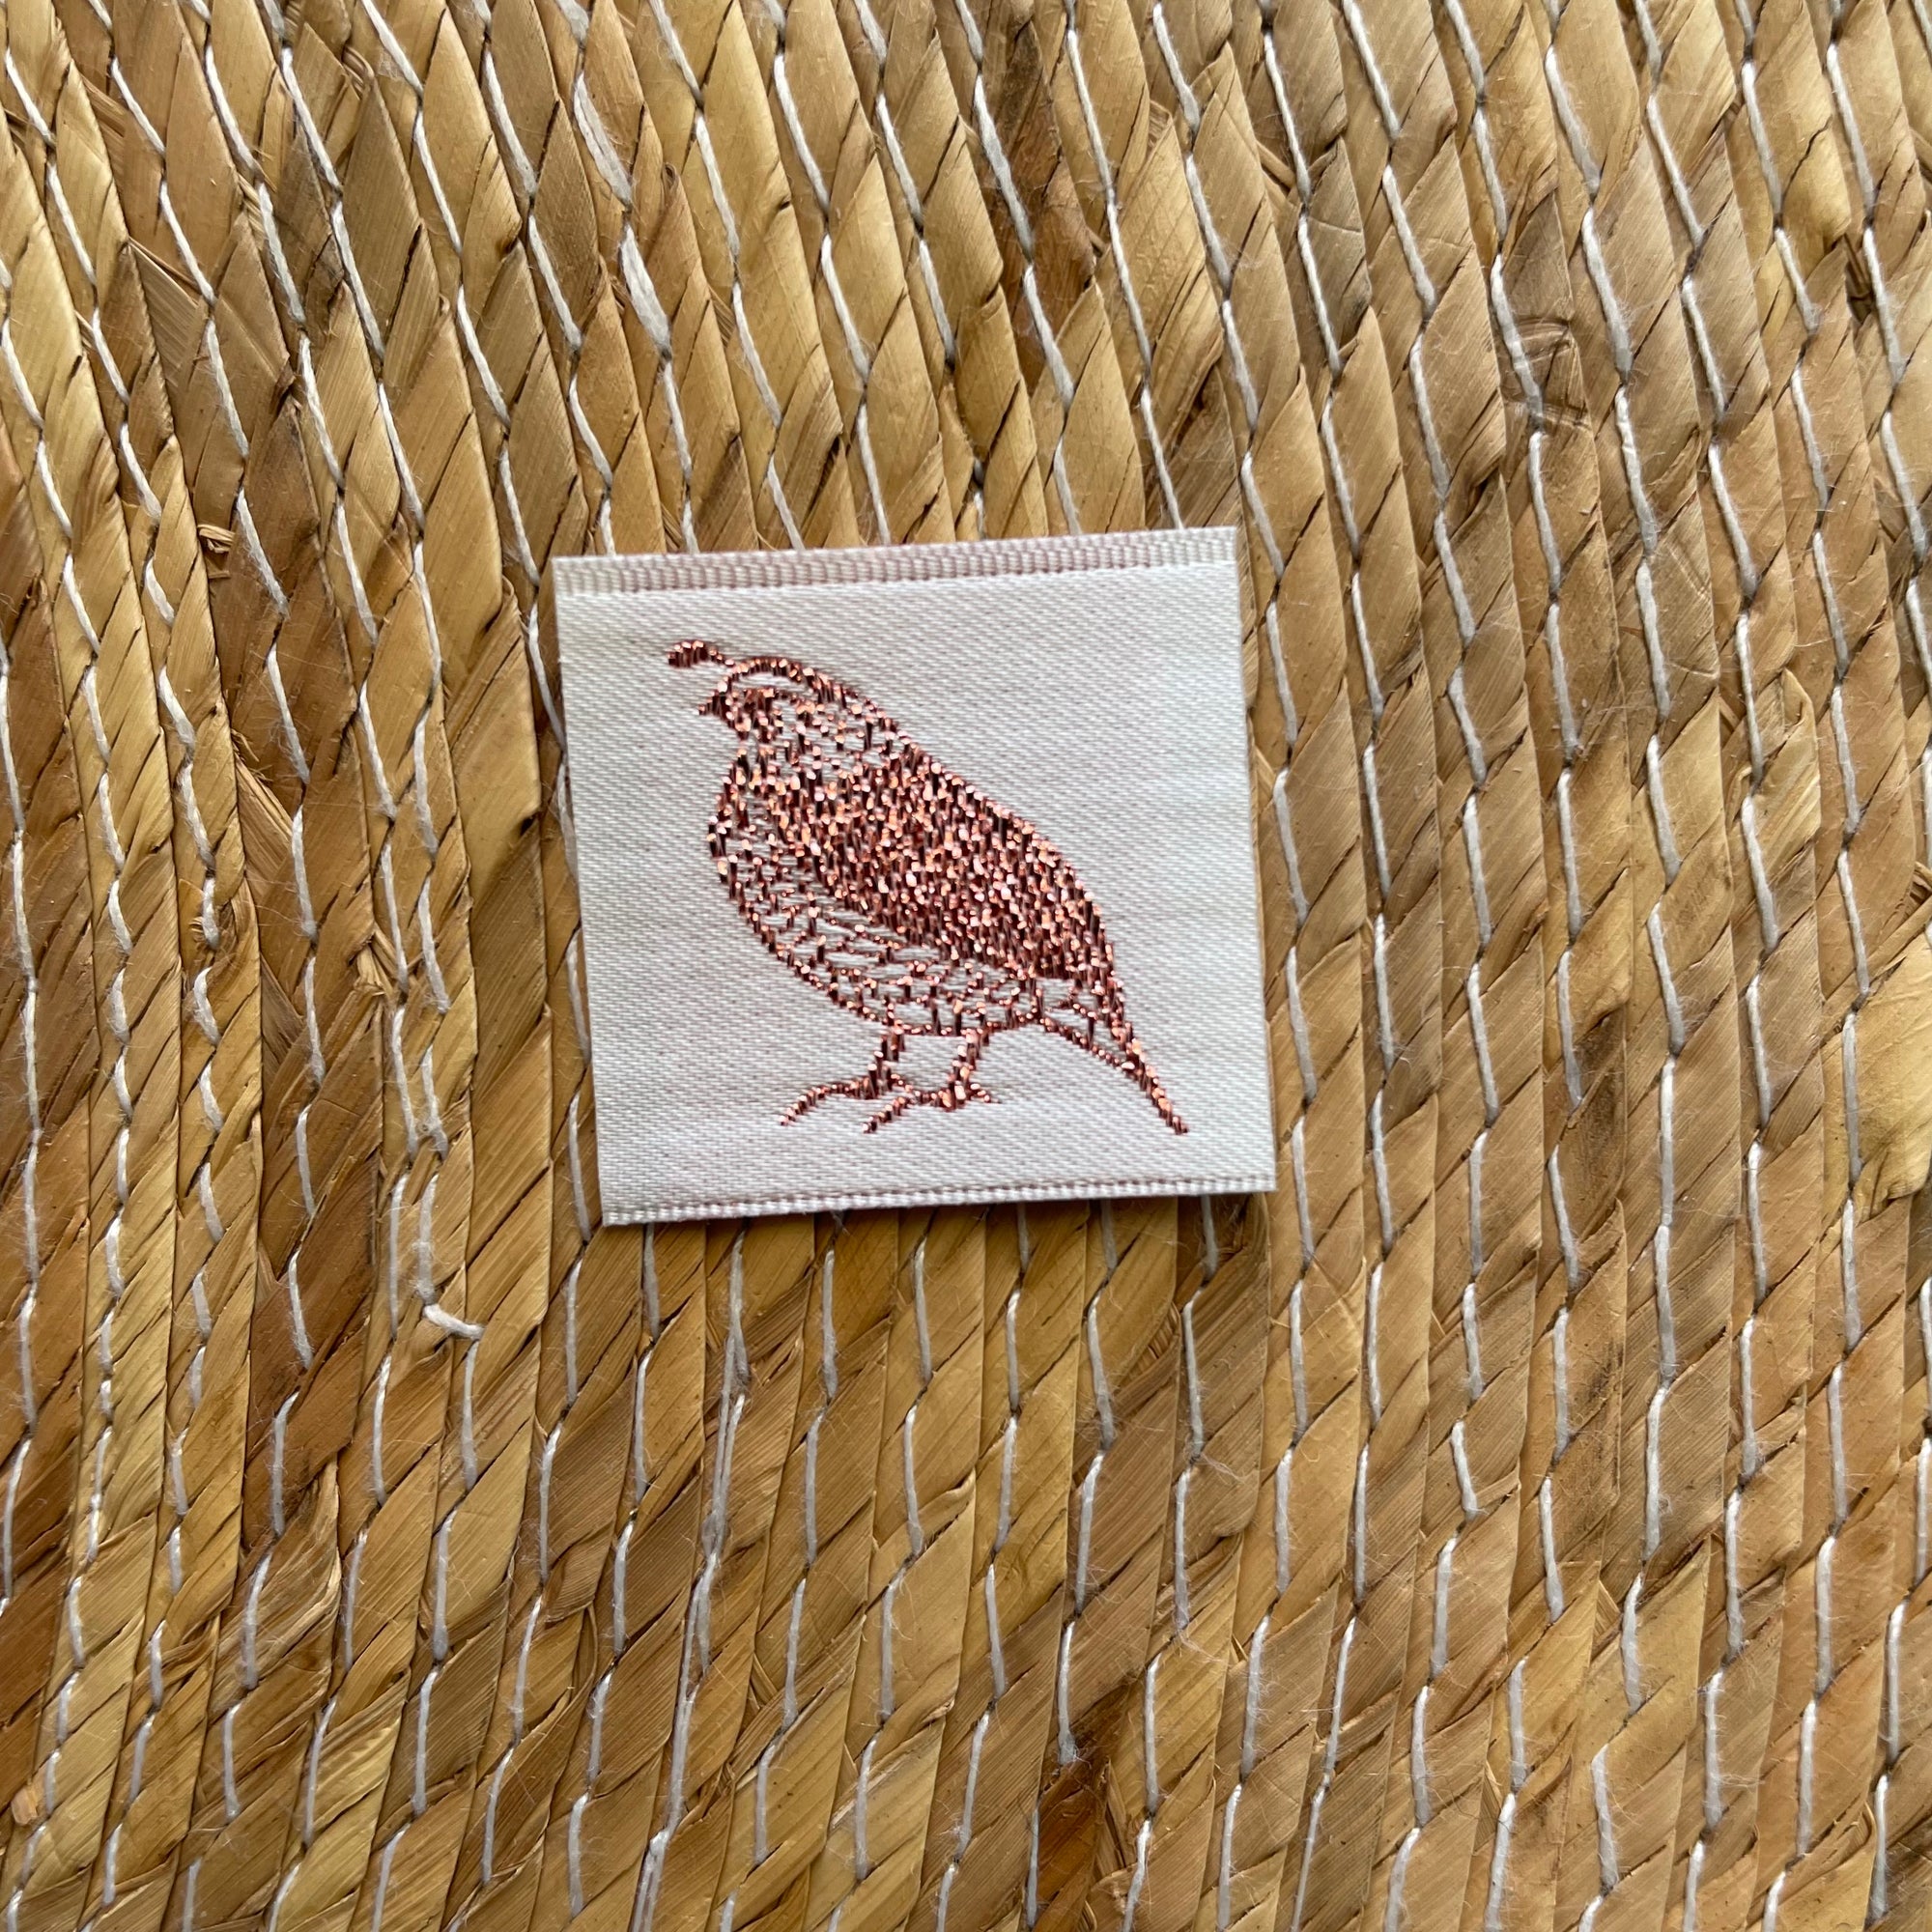 Satin woven label with lurex thread